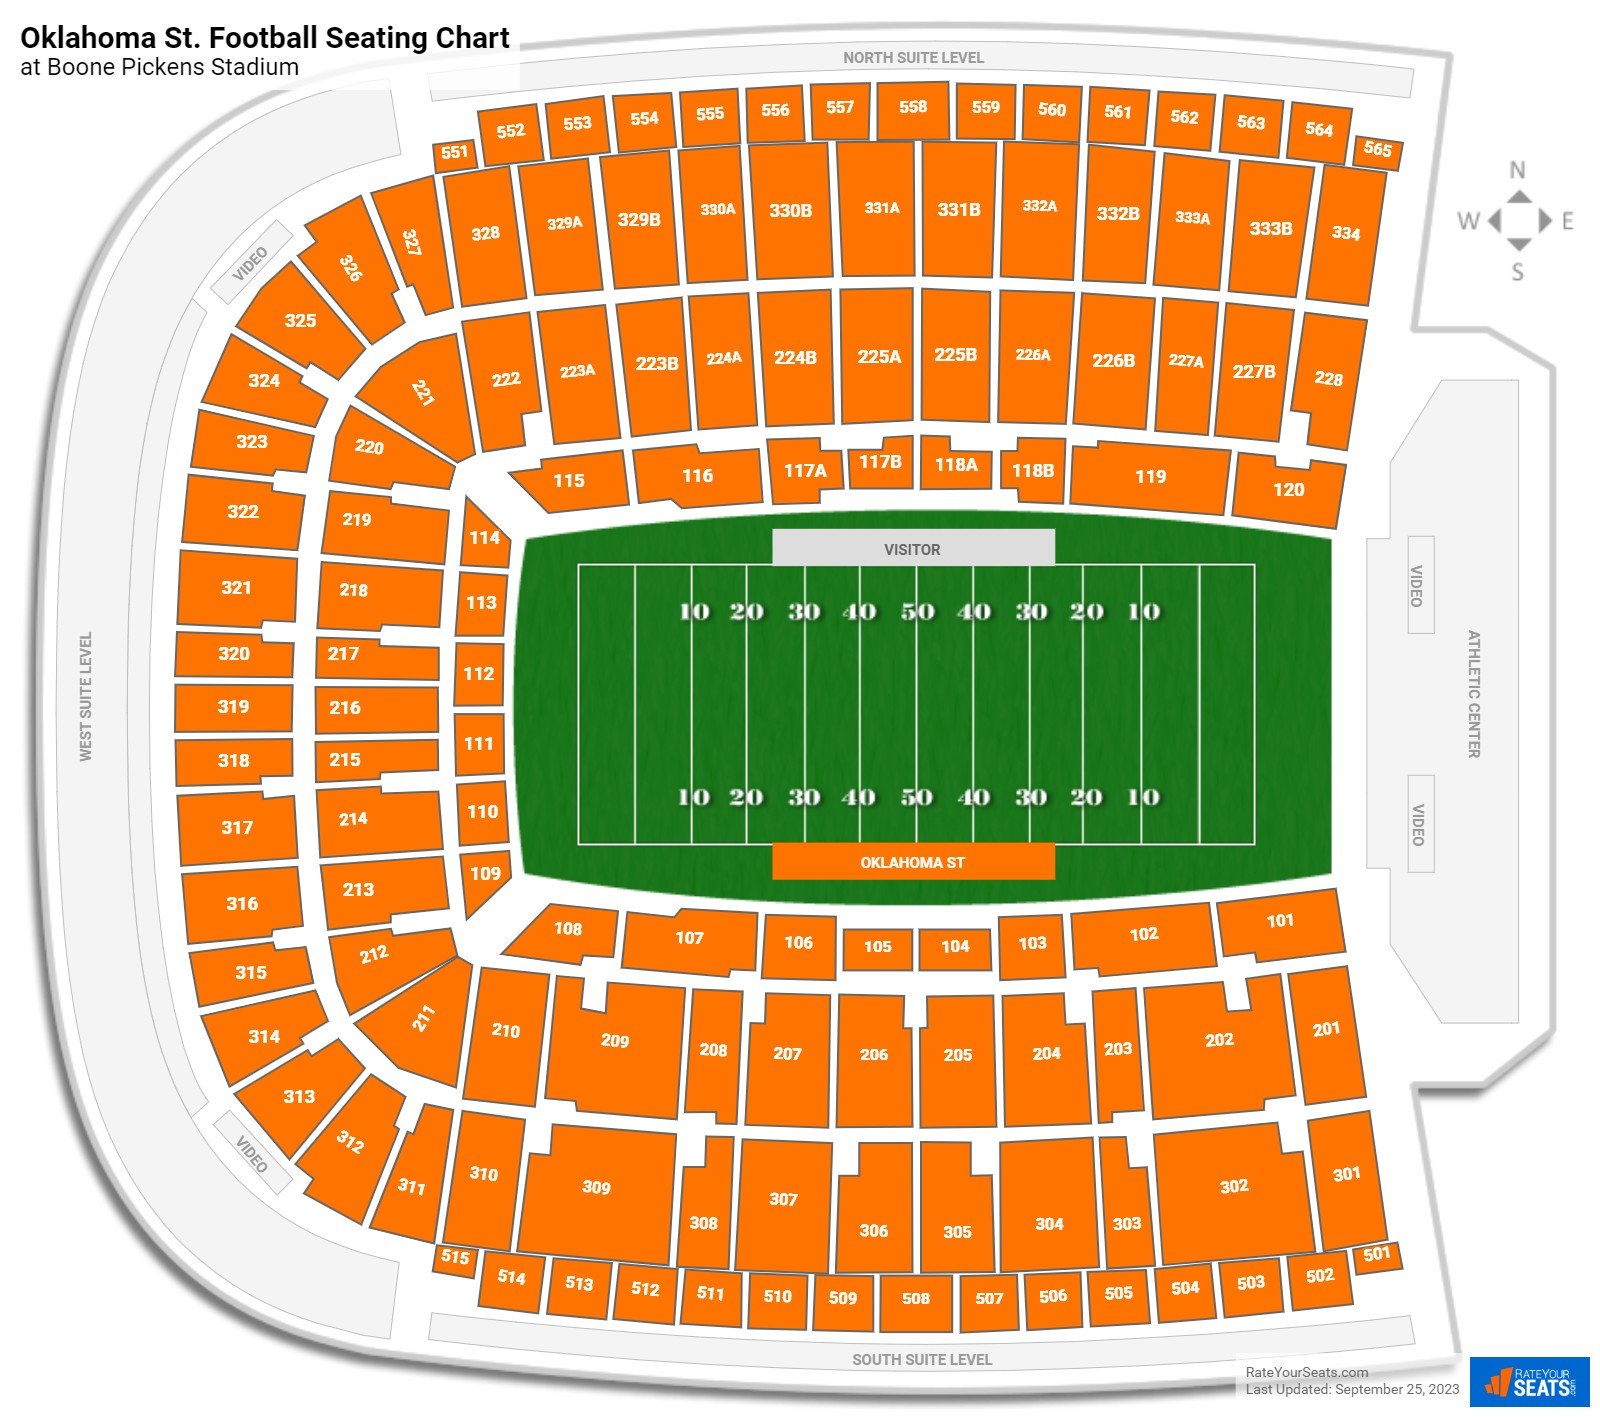 Oklahoma St. Cowboys Seating Chart at Boone Pickens Stadium